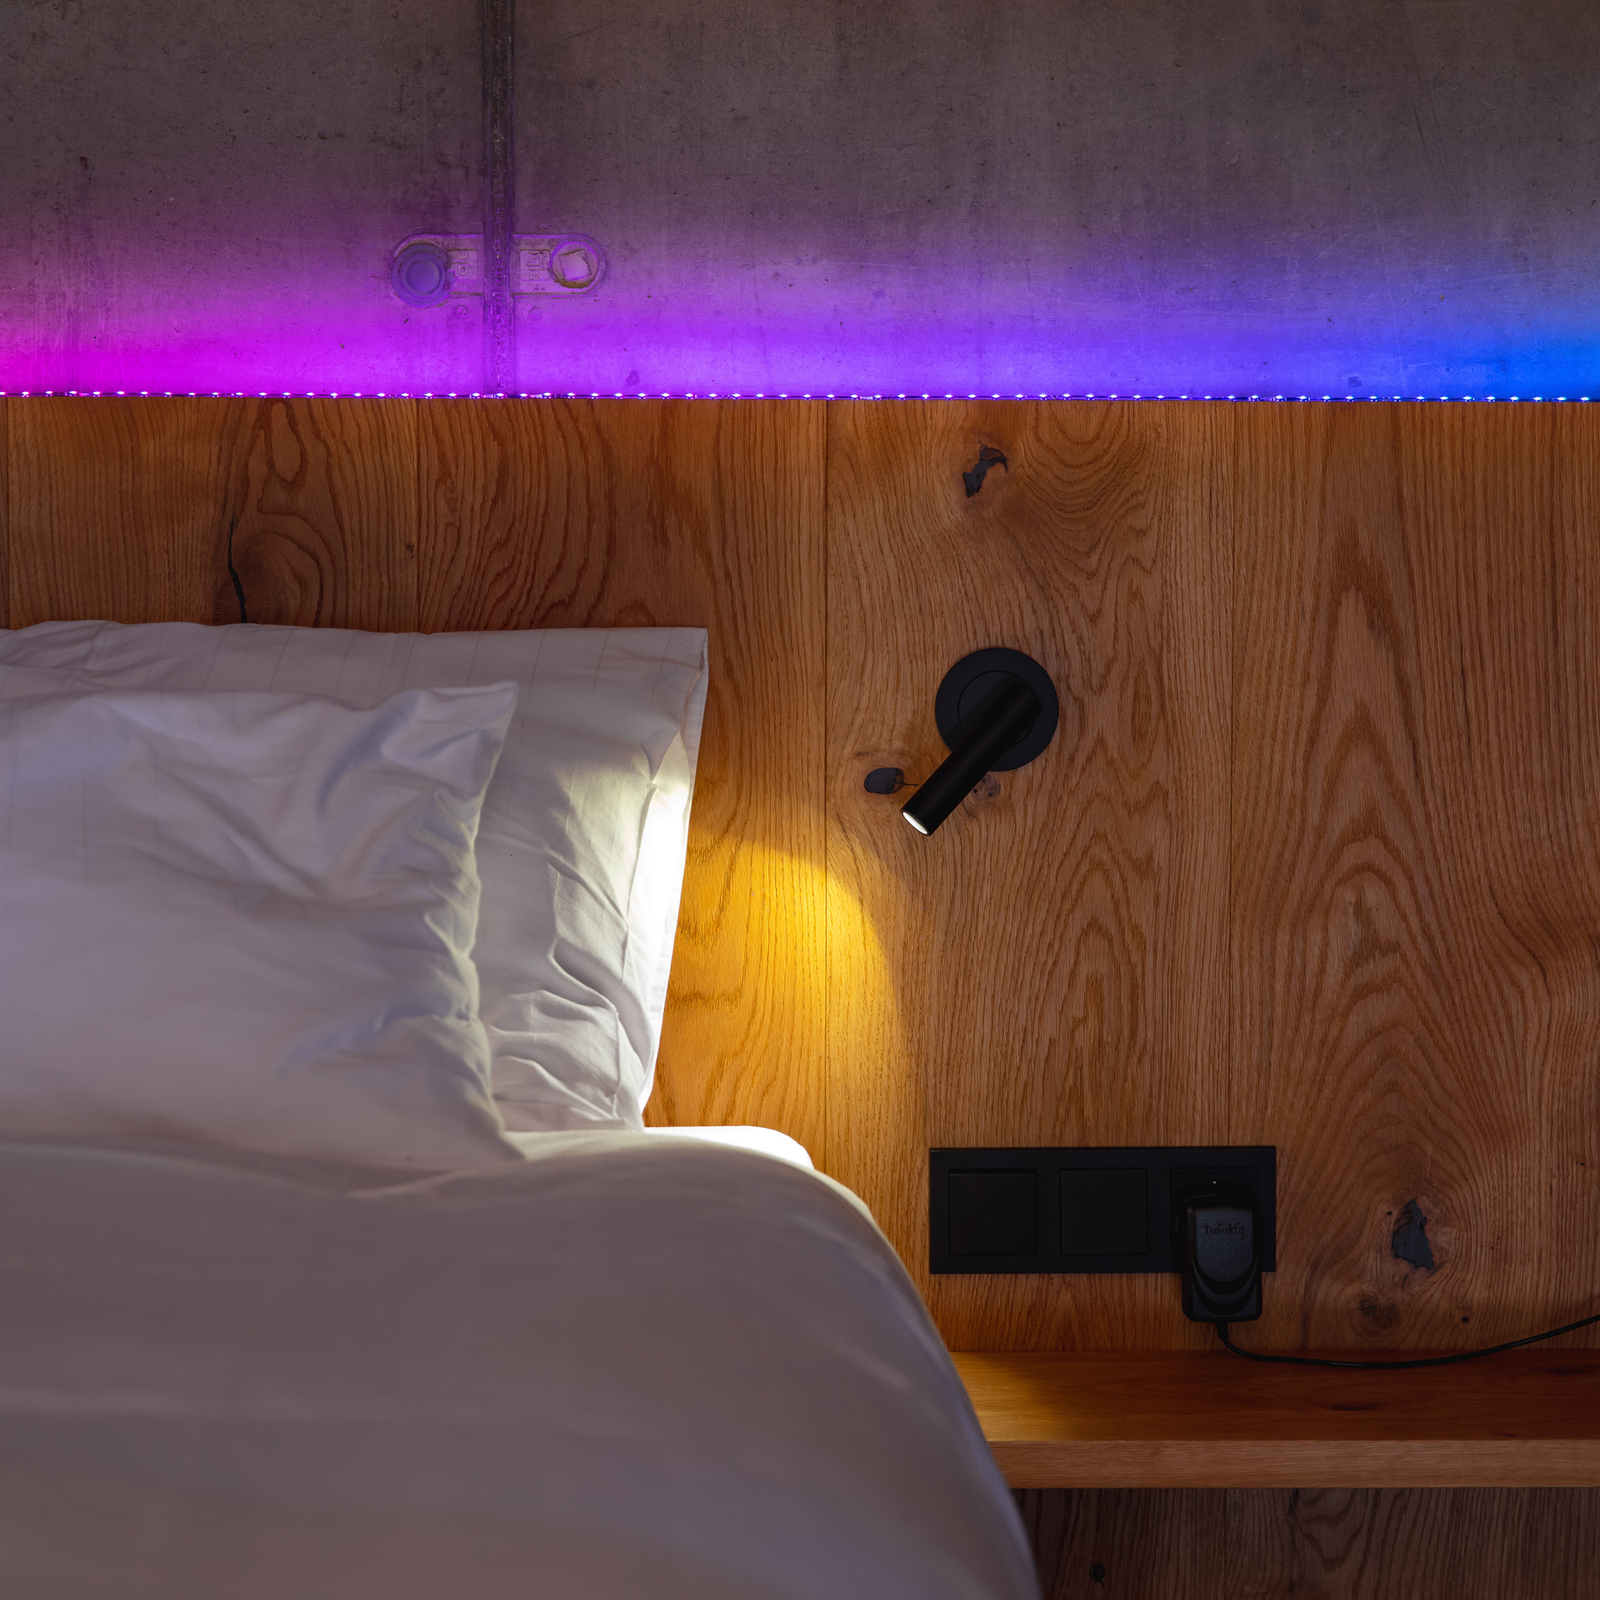 Twinkly Light line LED-Strip RGB 1,5m Erweiterung